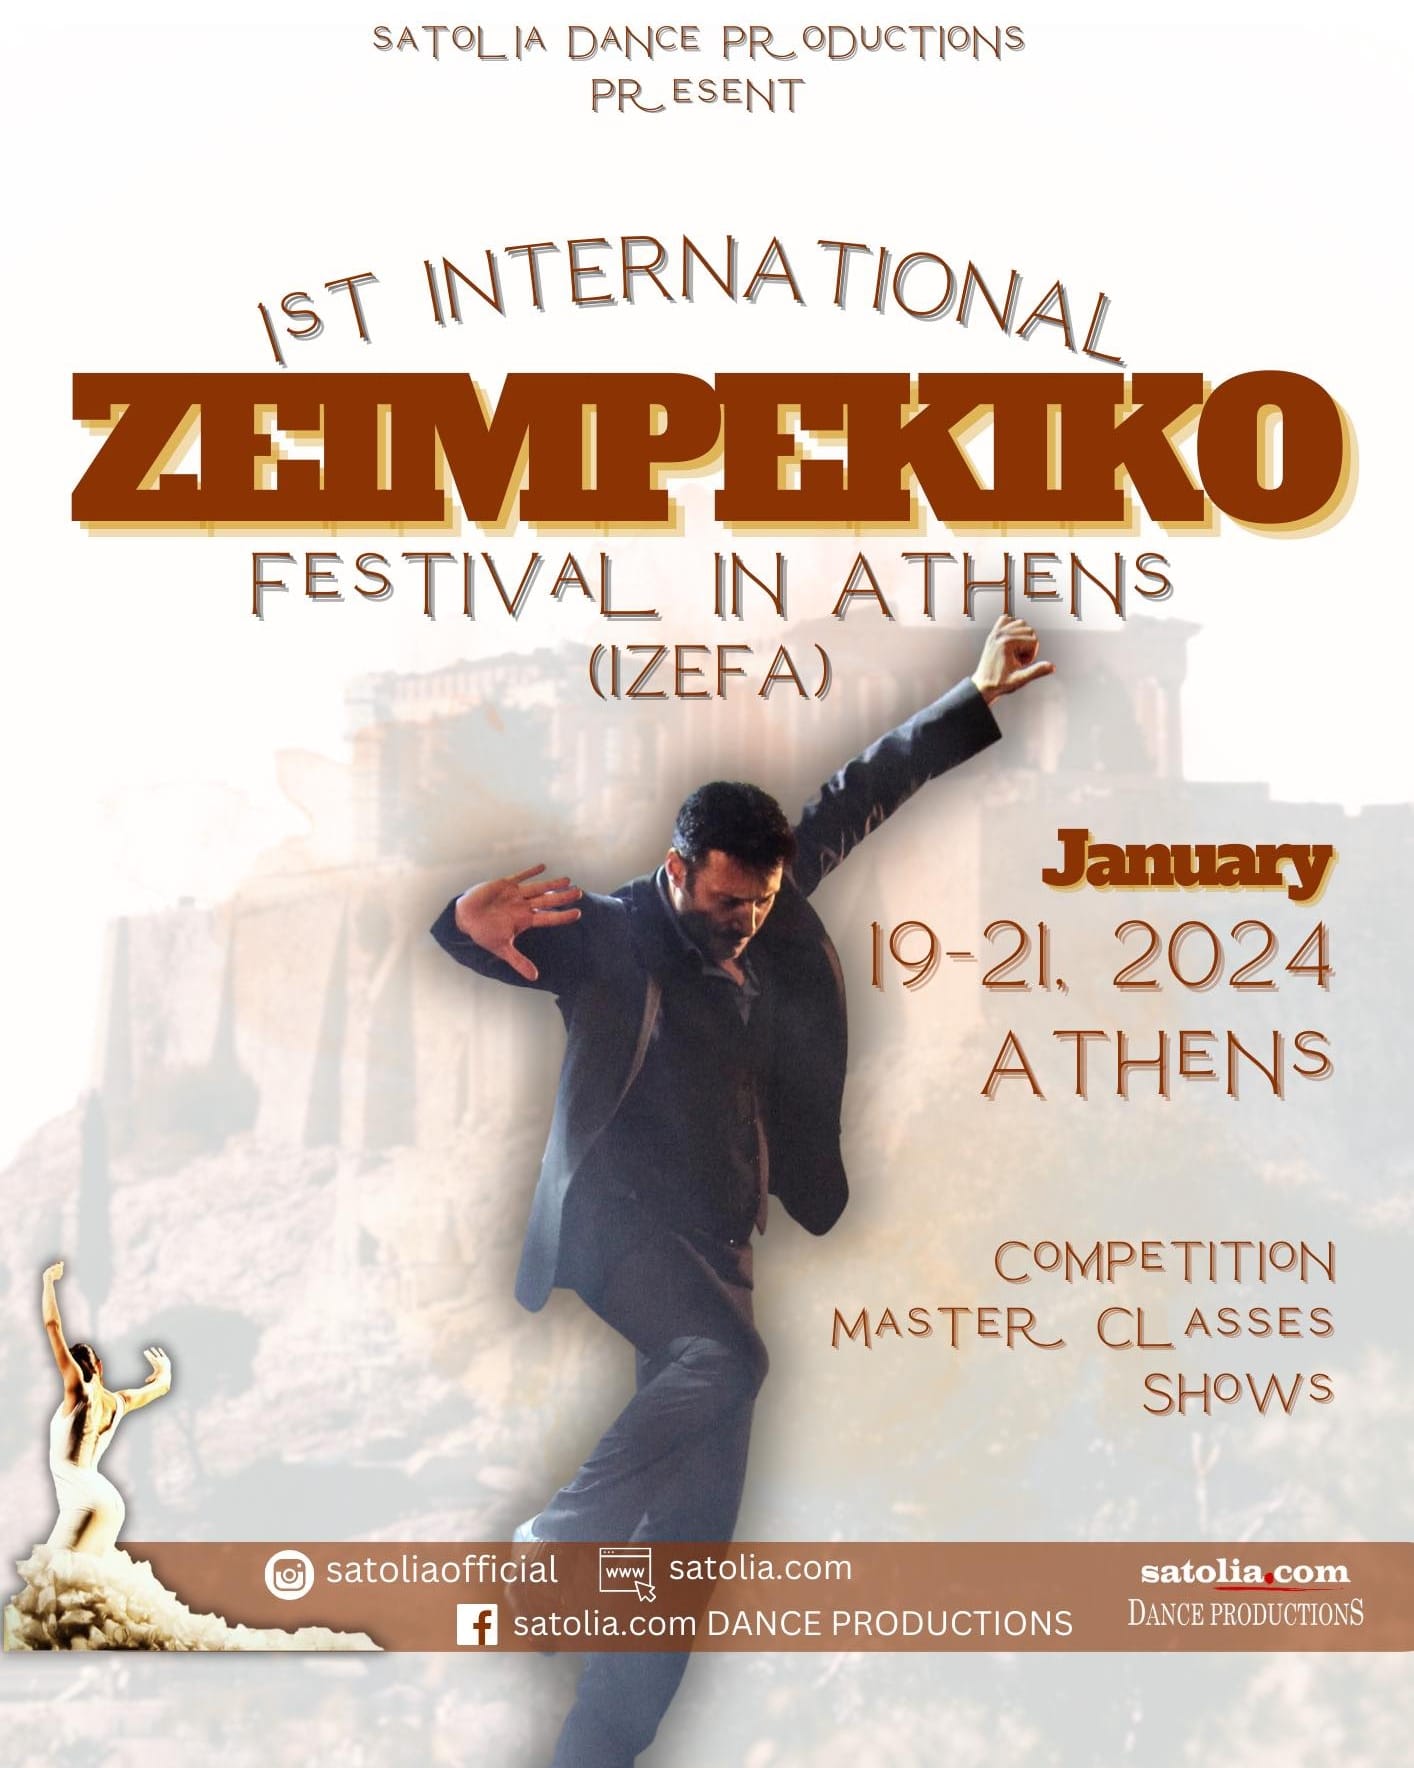 1st Intl Zeimpekiko Festival in Athens (IZEFA)